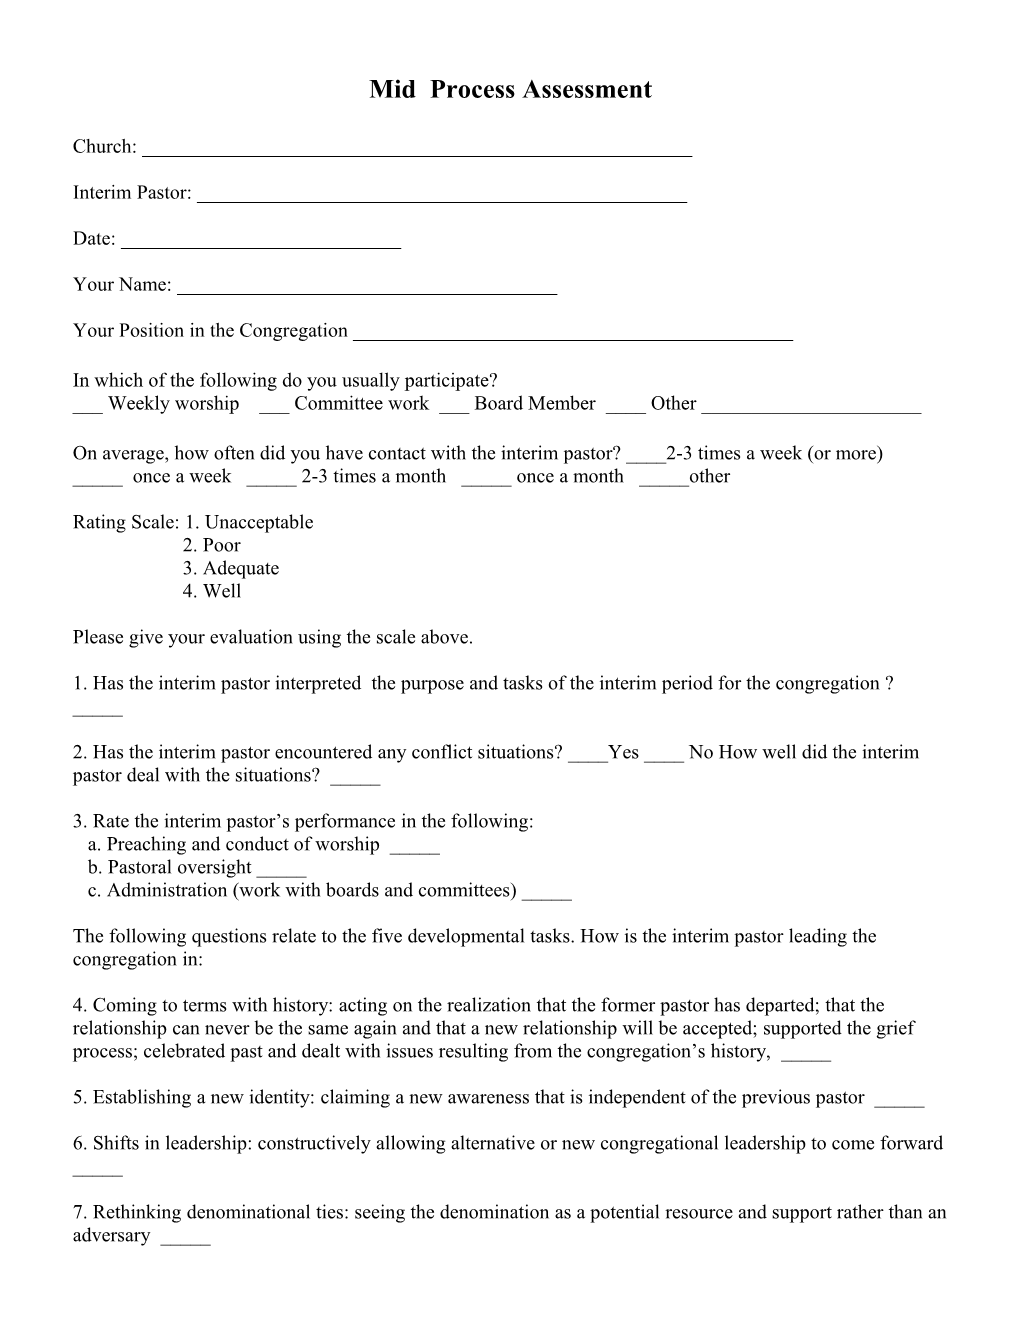 Evaluation Form for the Interim Process